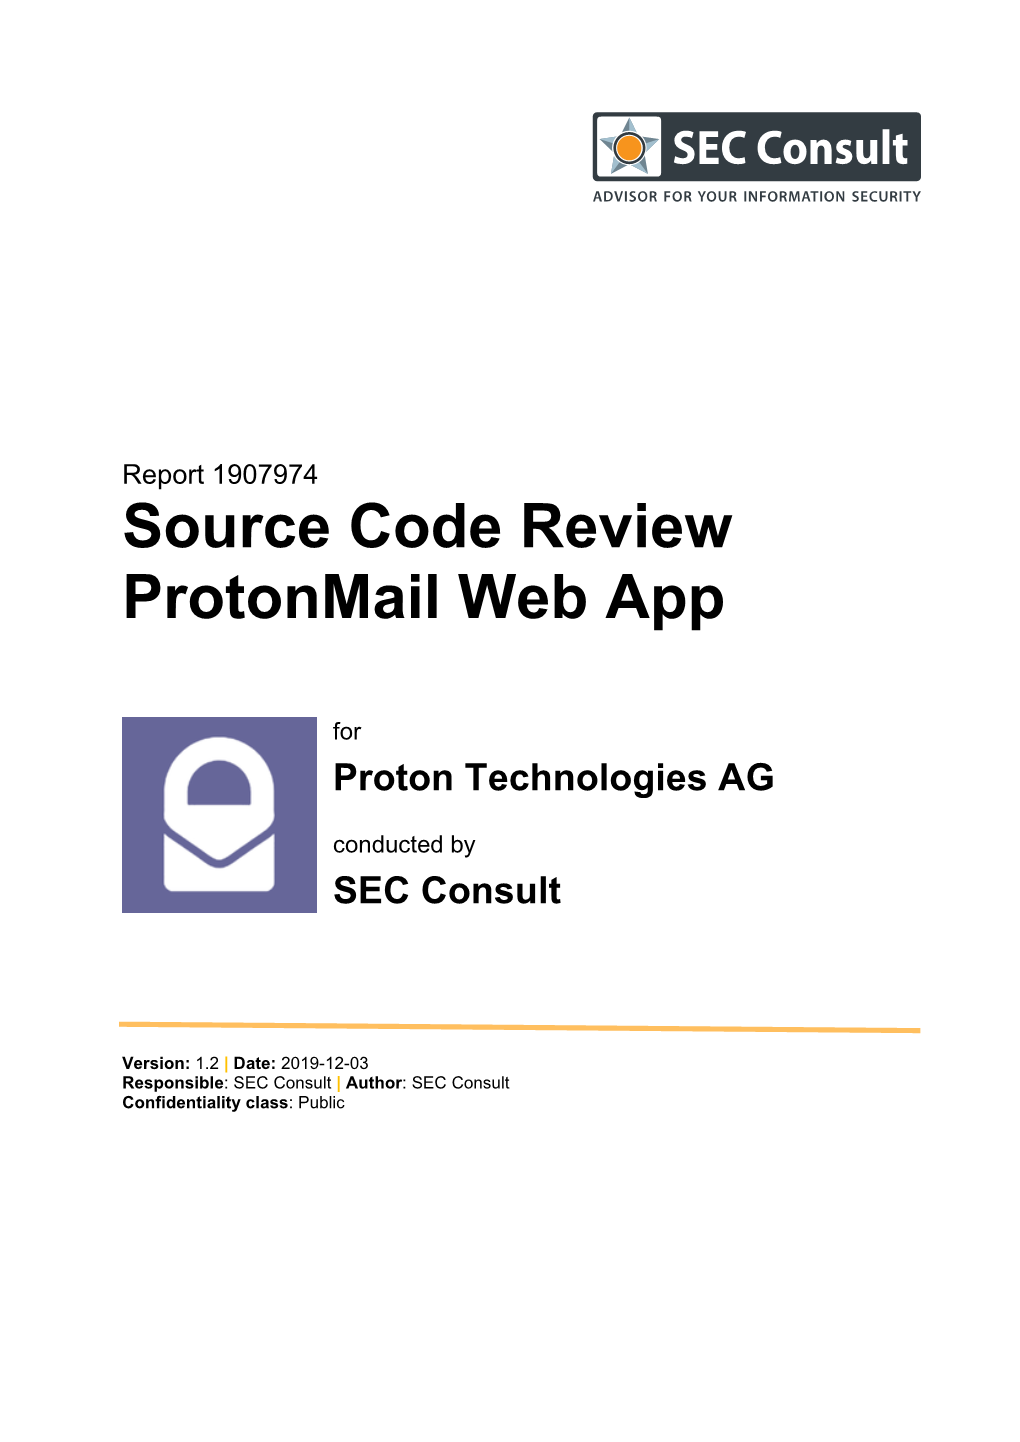 Source Code Review Protonmail Web App